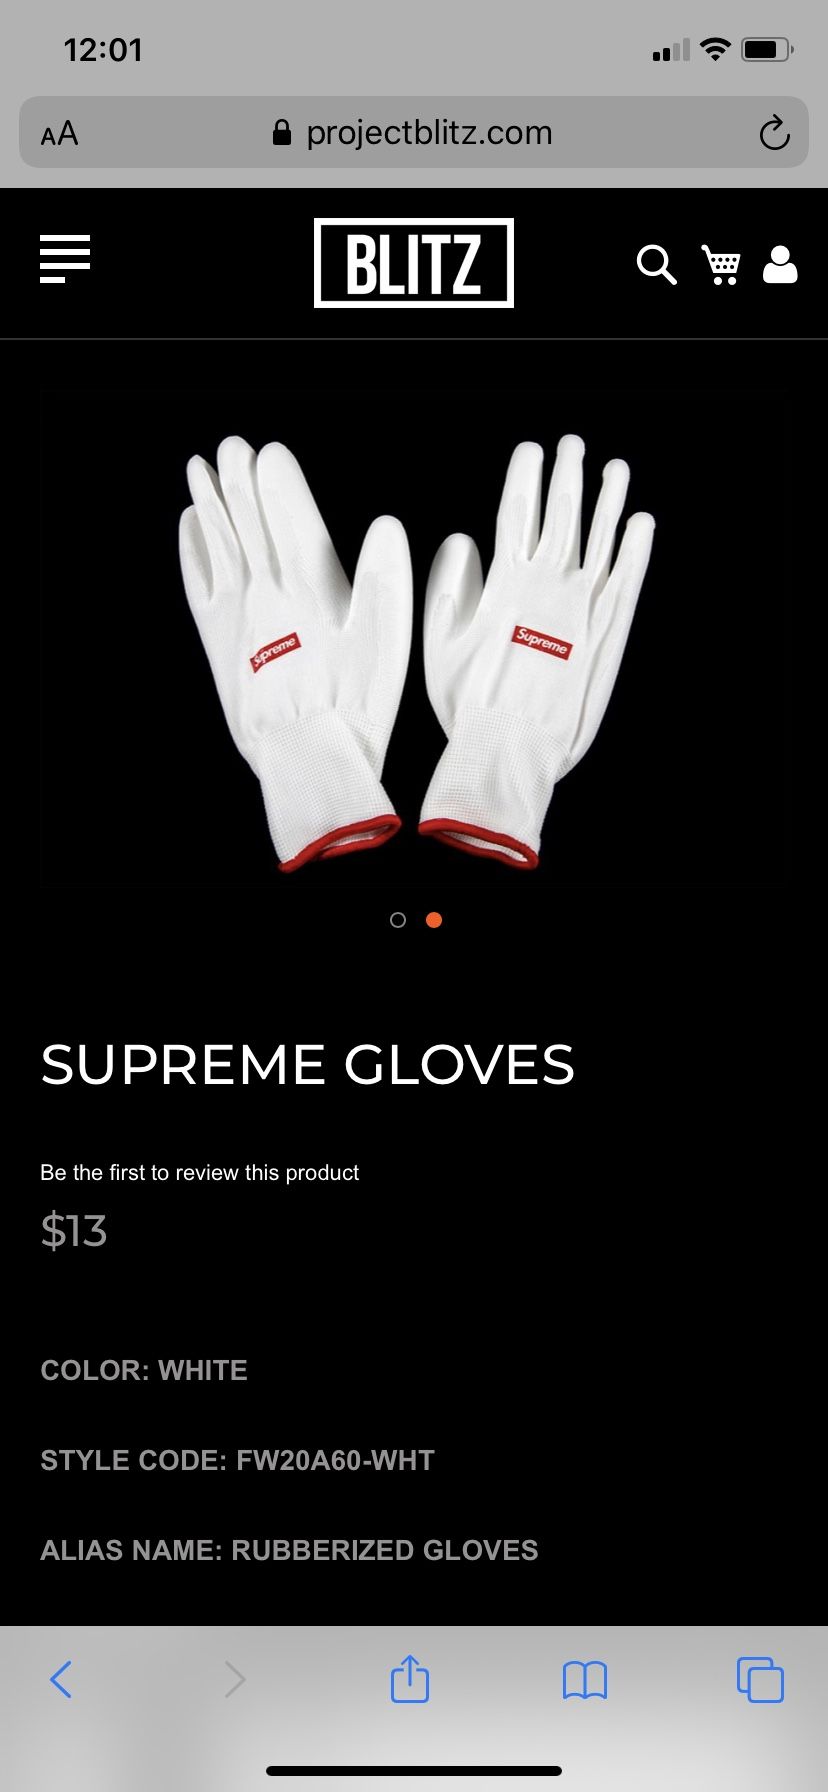 Brand new supreme gloves $15